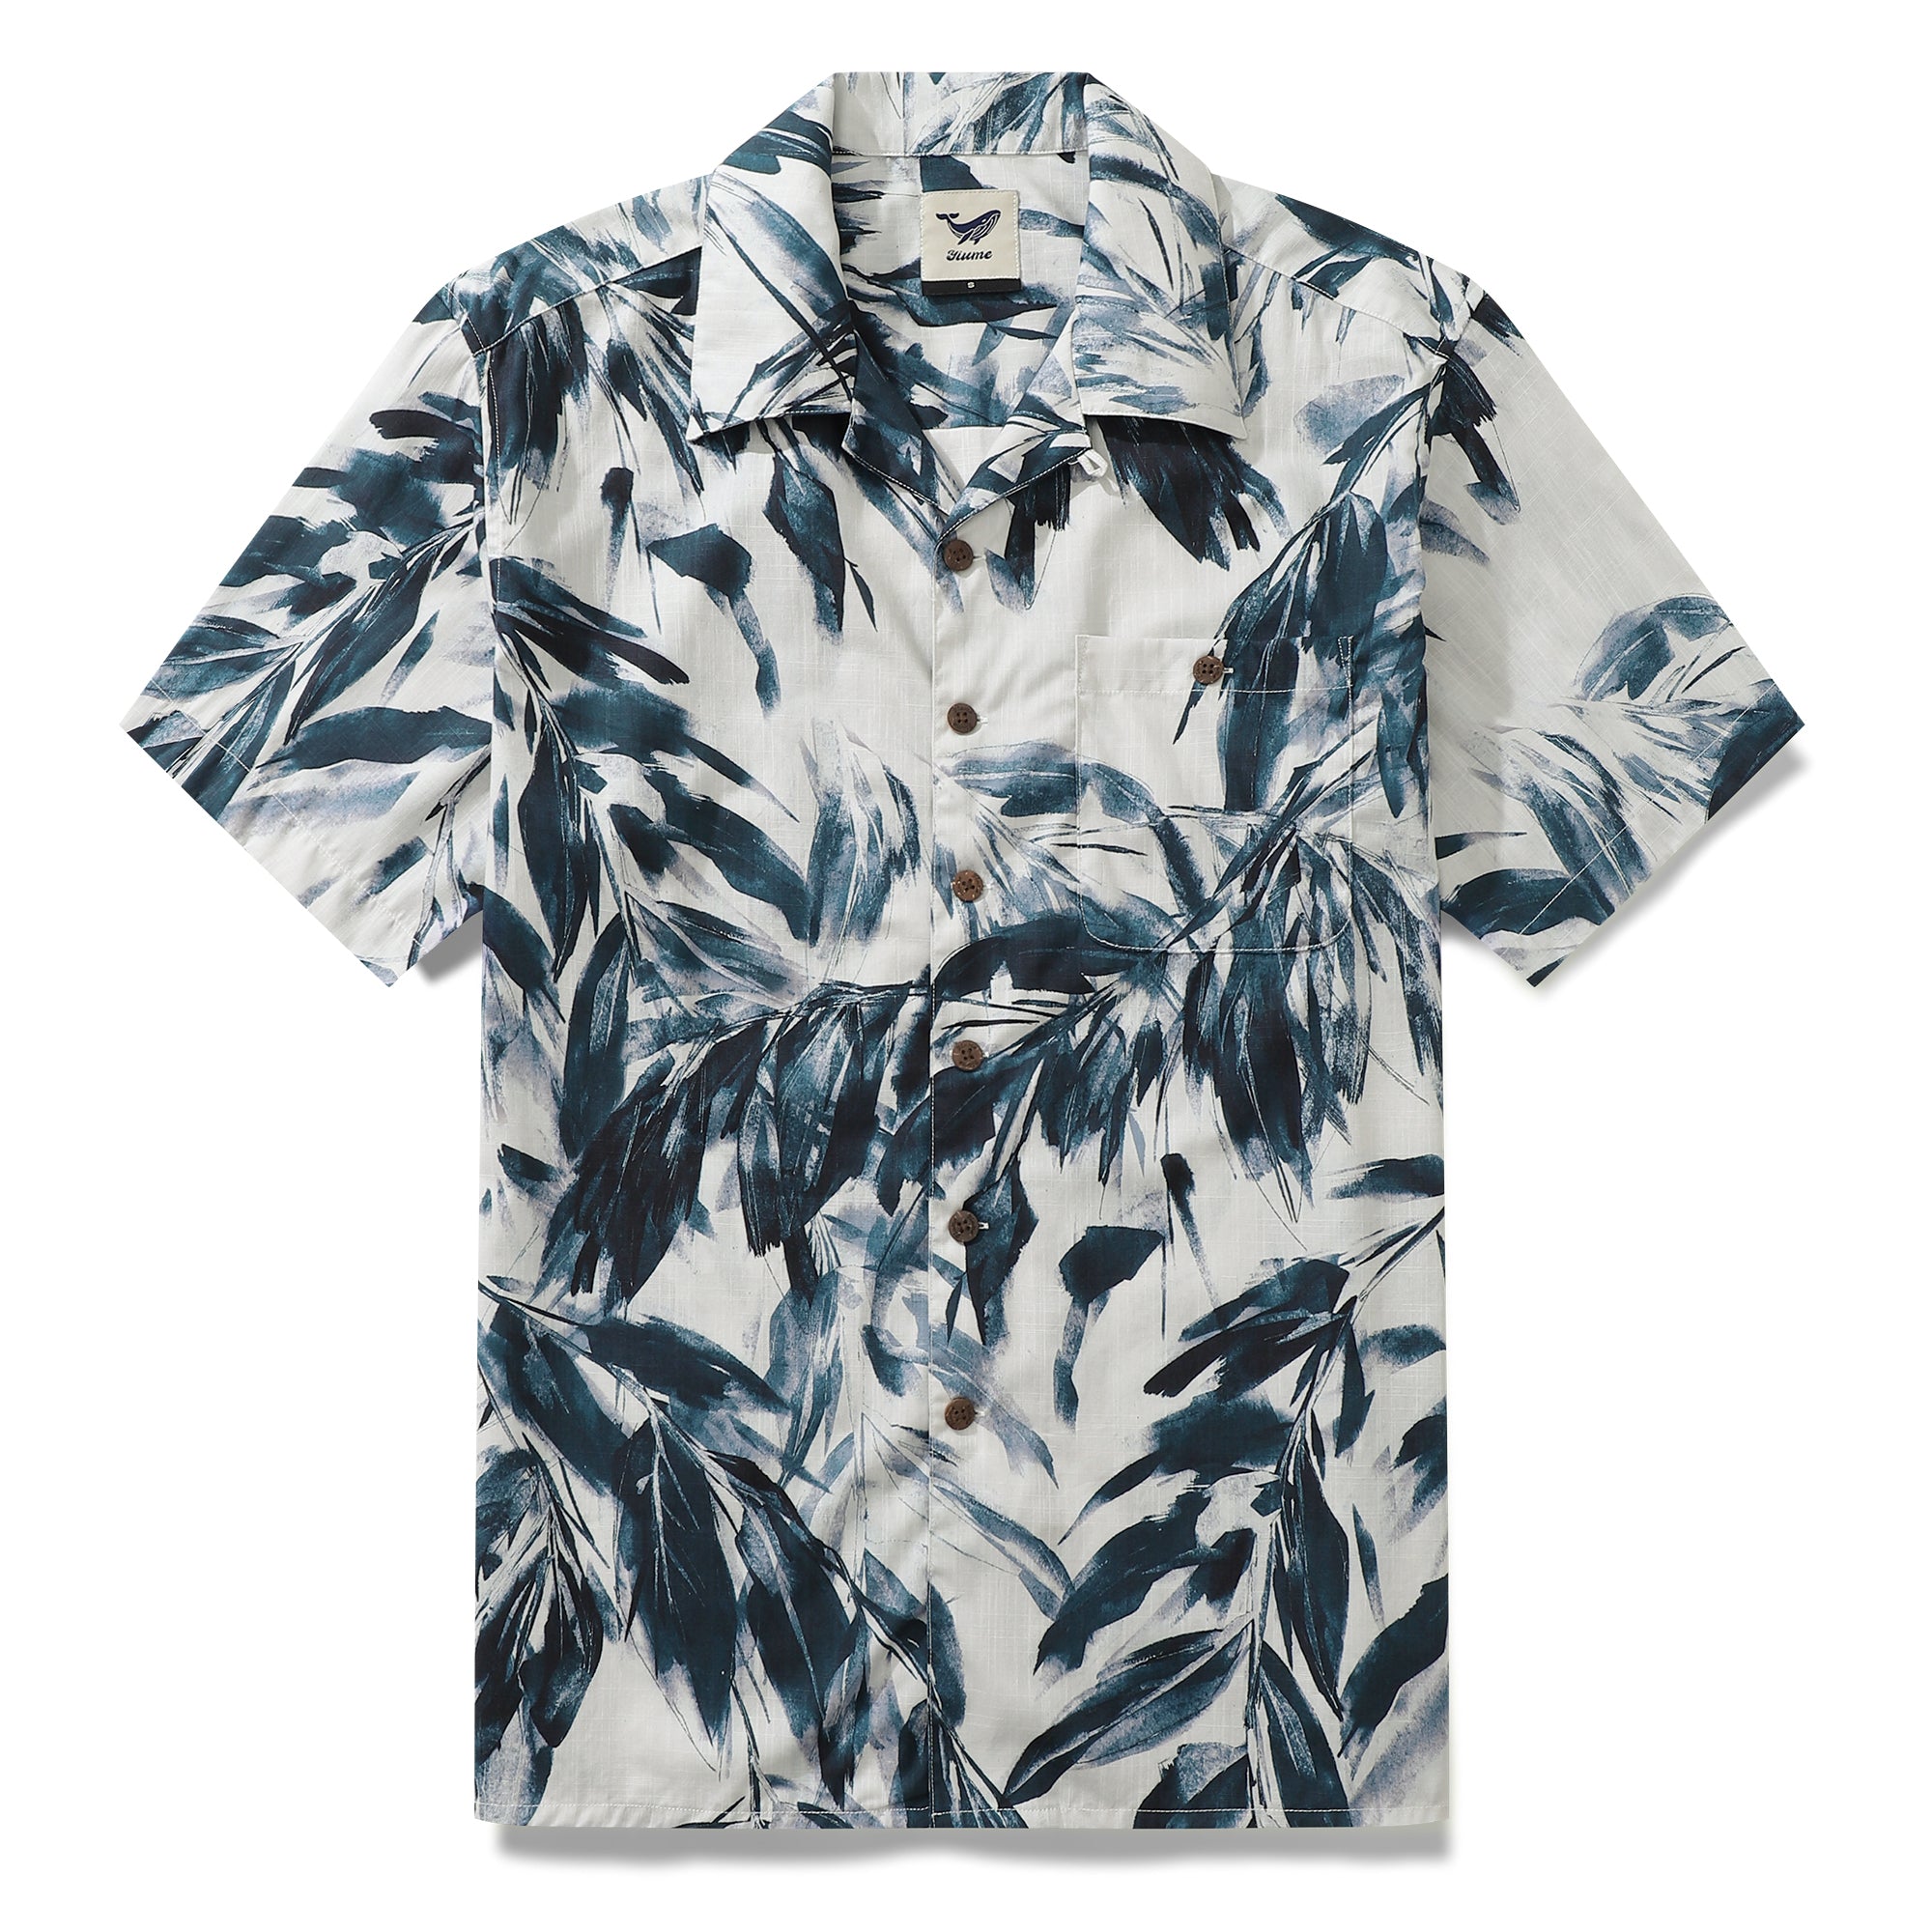 Herren Aloha Shirt Tuschemalerei Bambusblätter Baumwolle Kurzarm Camp Shirt